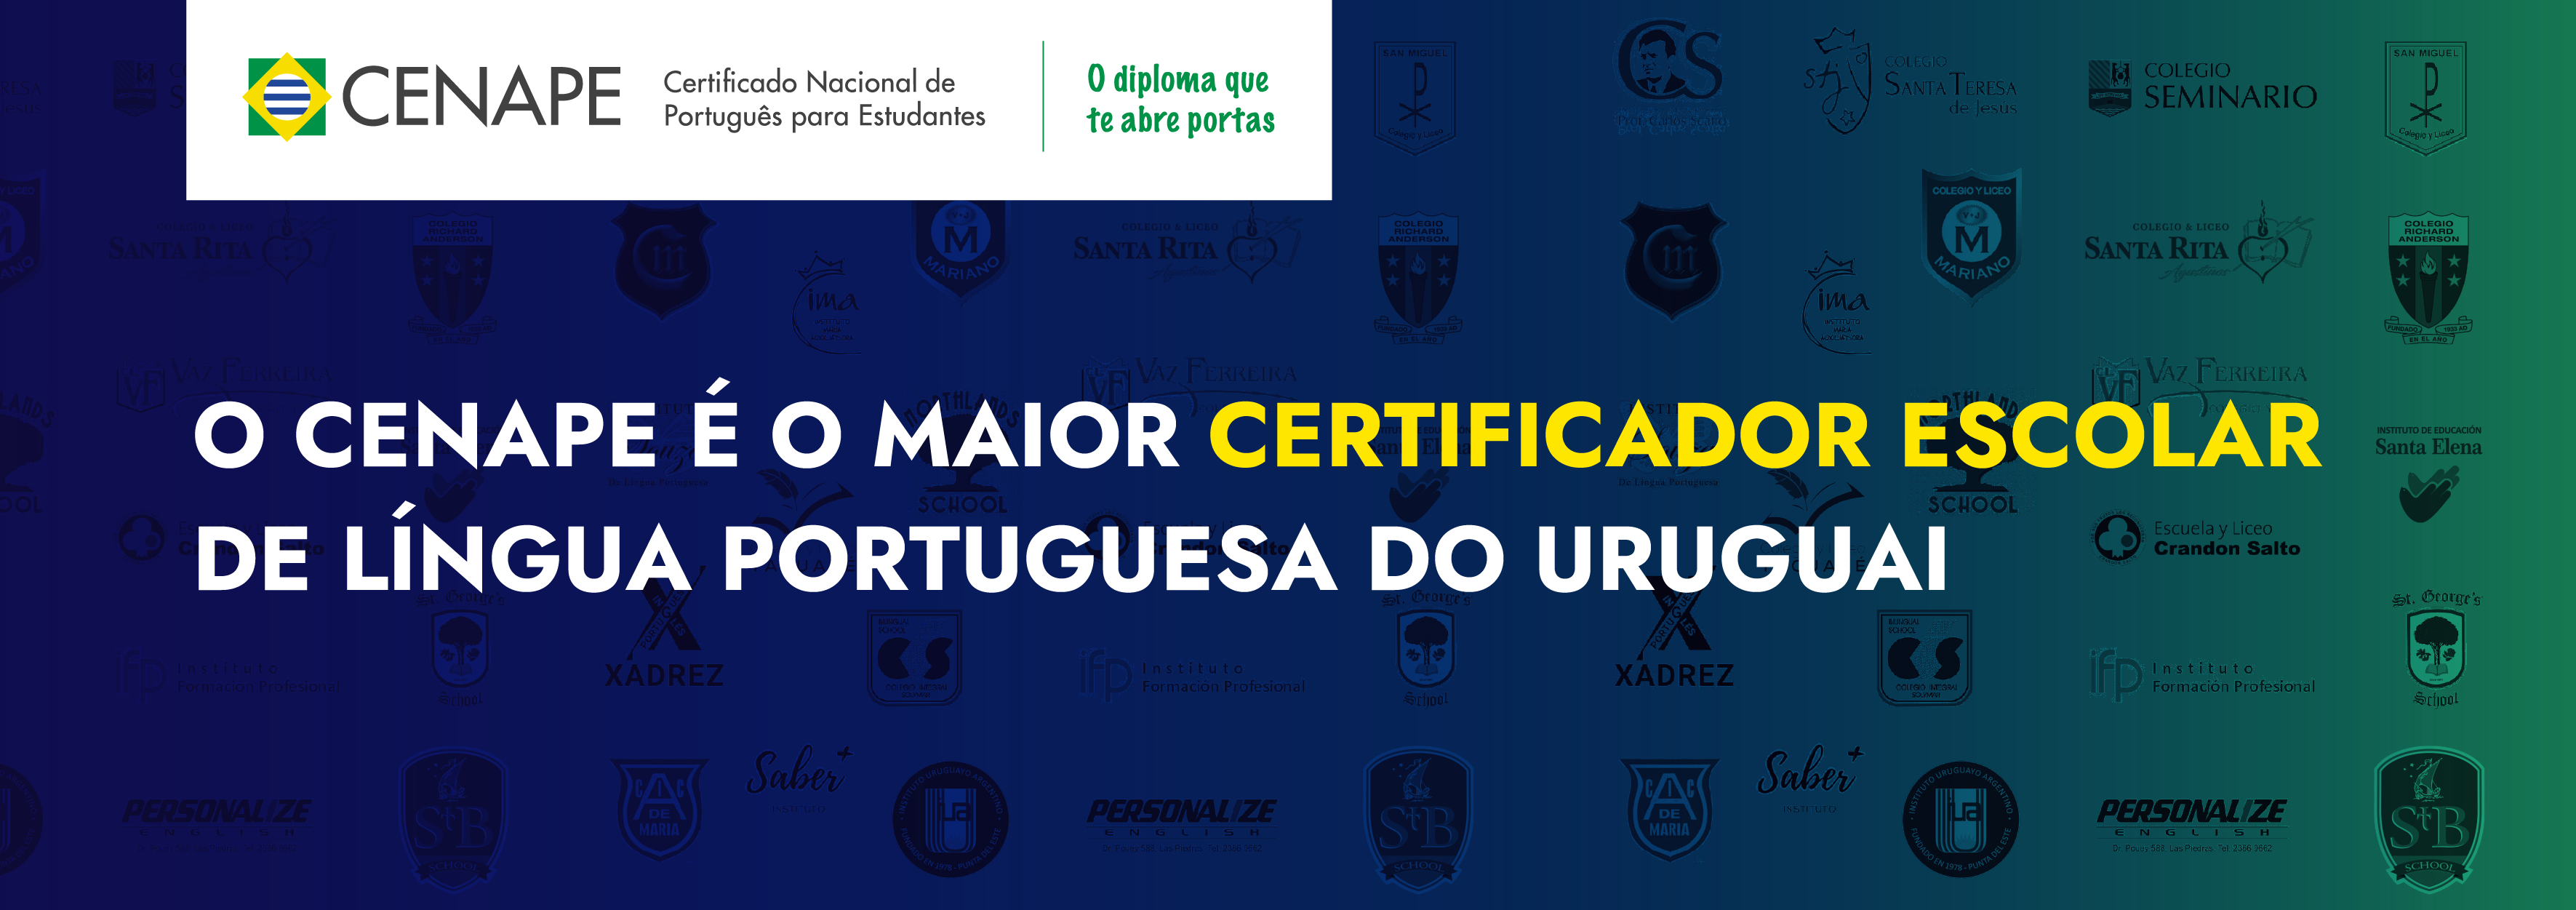 cursos de portugués en montevideo